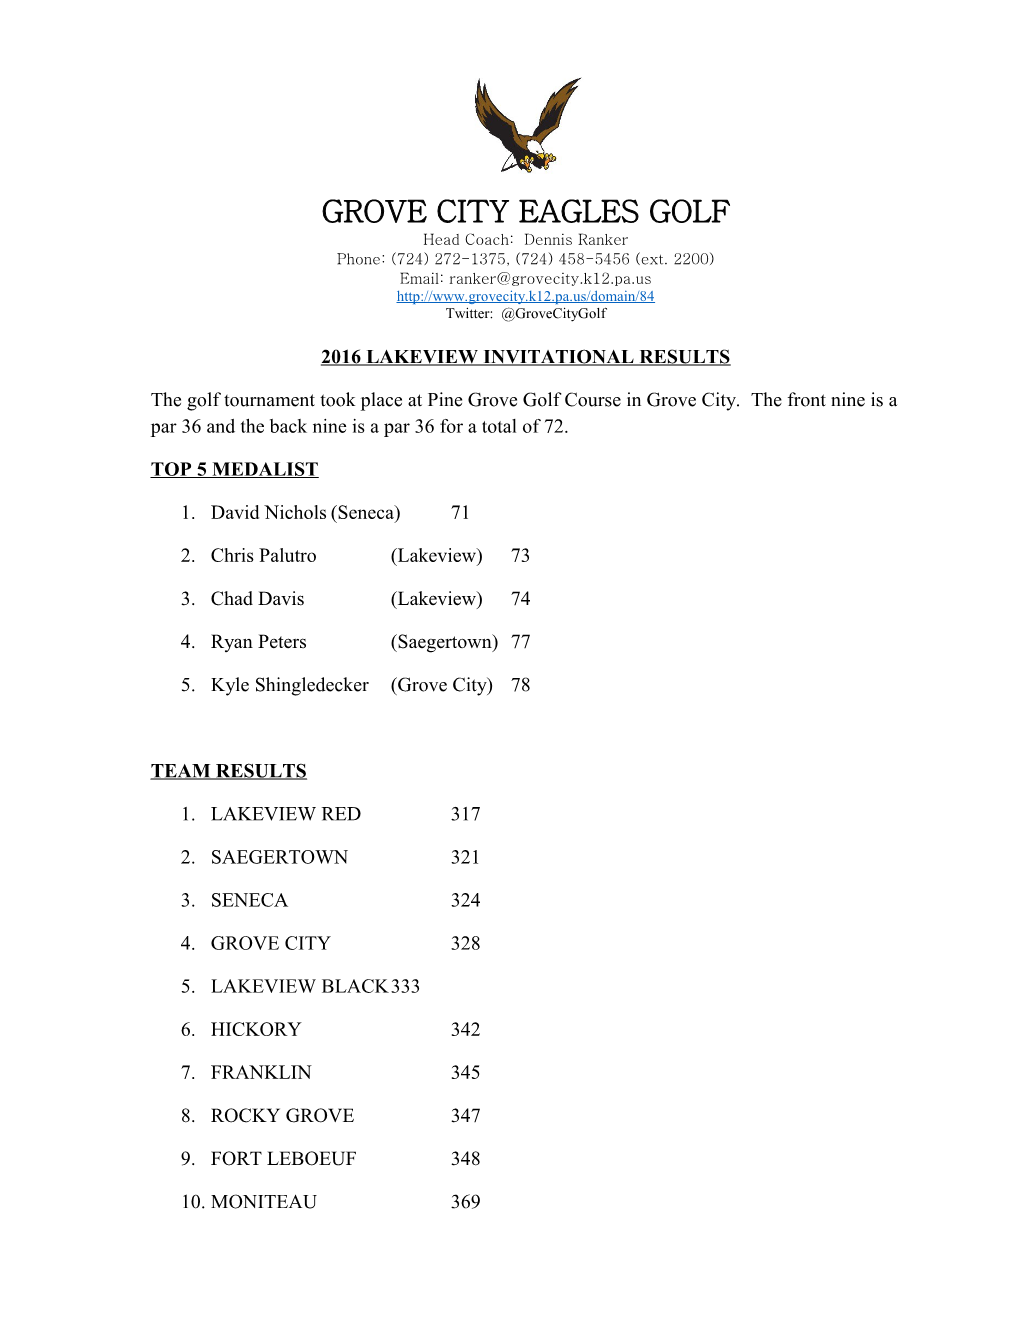 2006 Grove City Golf